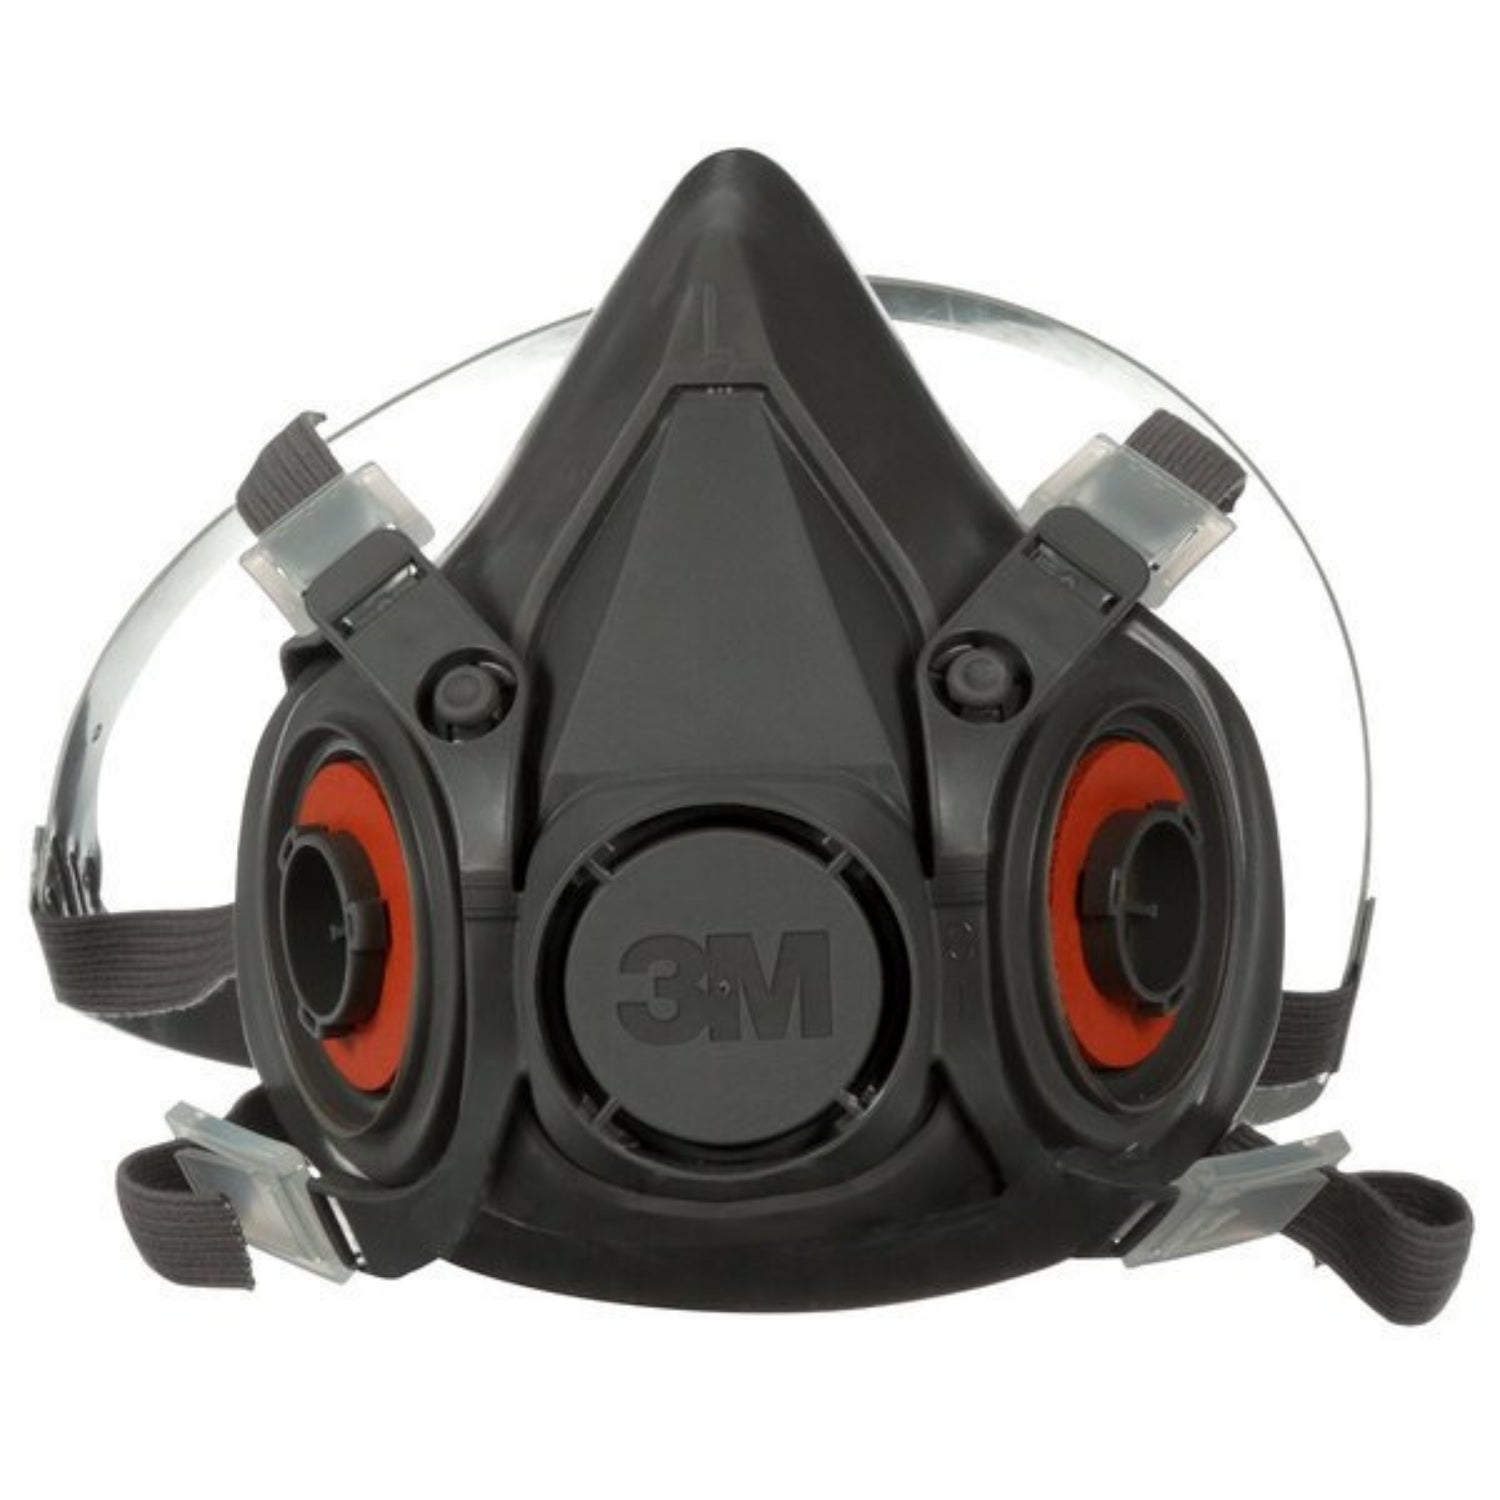 3M™ Half Facepiece Reusable Respirator 6300/07026(AAD) Large - Resist Gases, Vapors, Particulates, Adjustable Strap